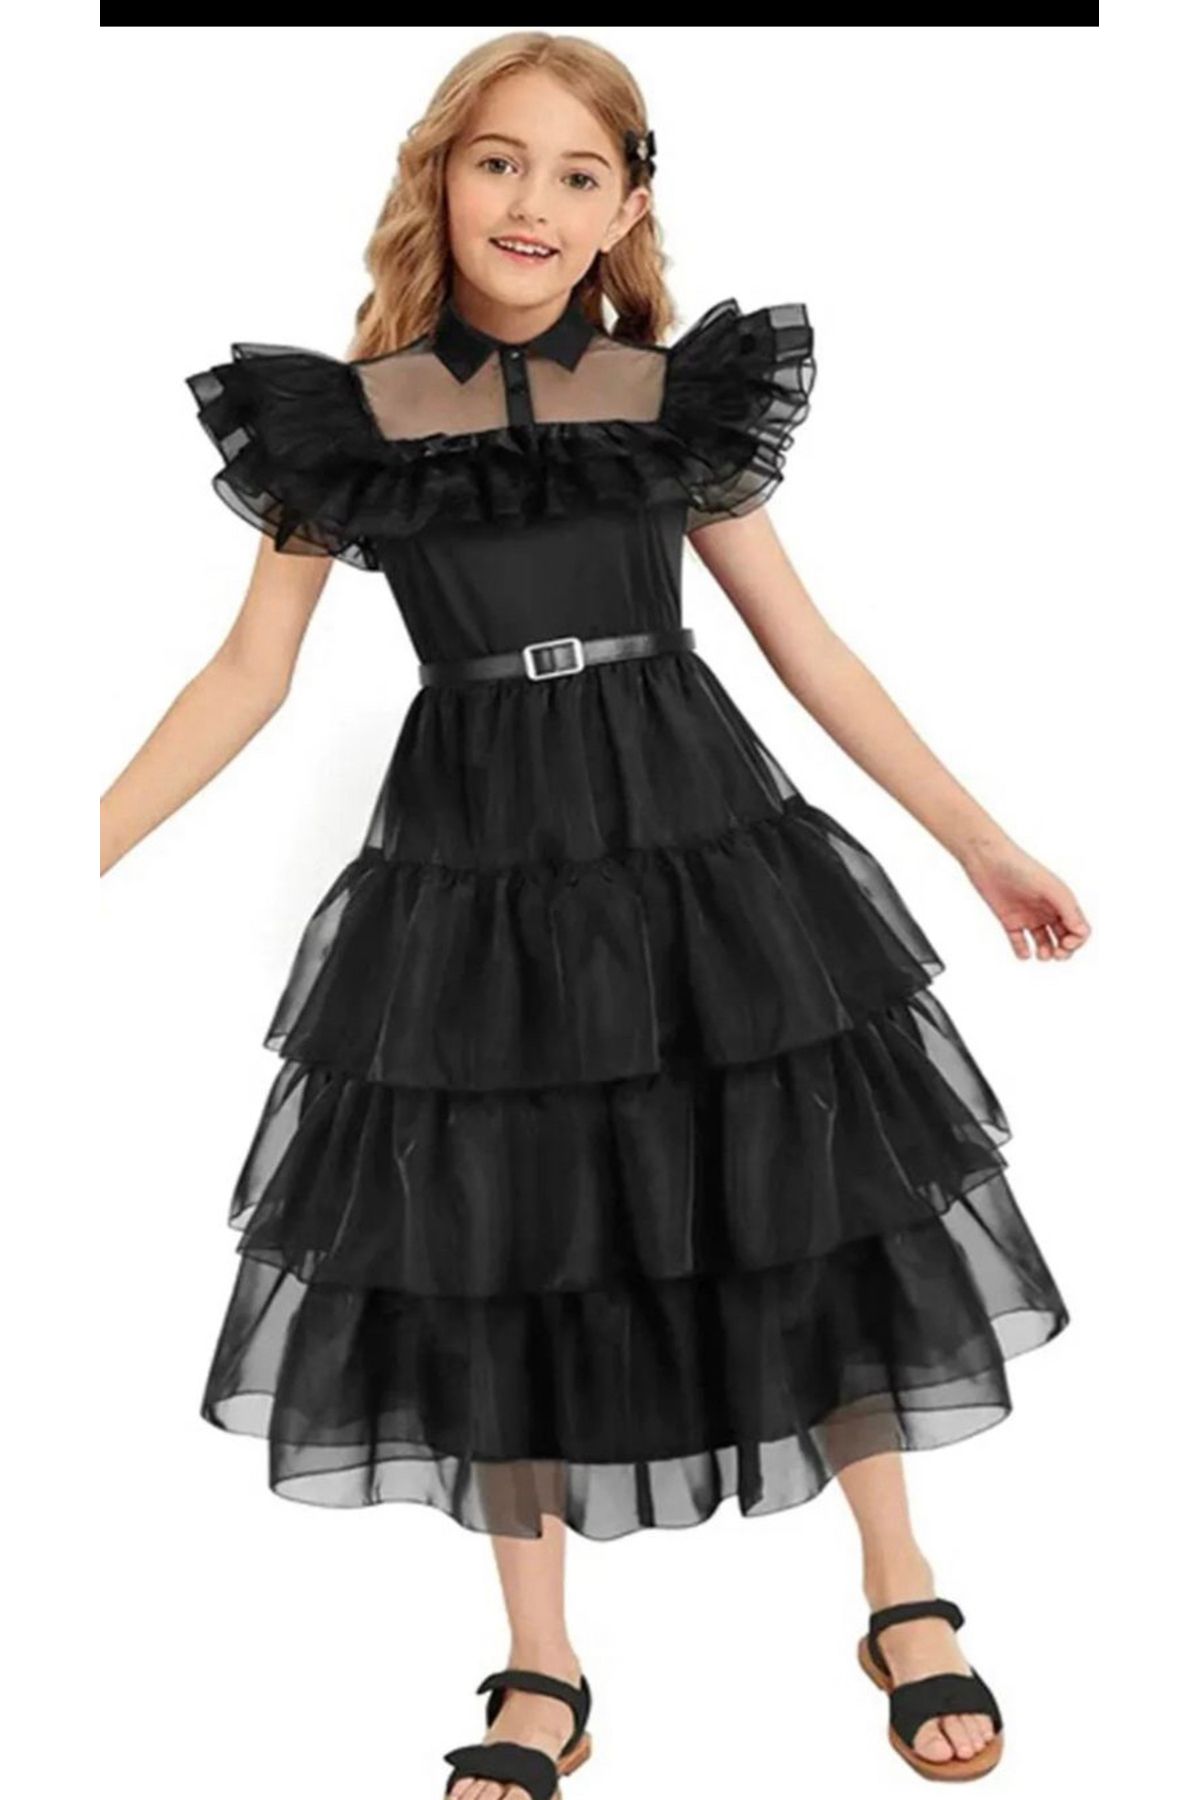 DİDAKİDS Wednesday Elbise Kız Çocuk Wednesday kostüm Siyah Elbise